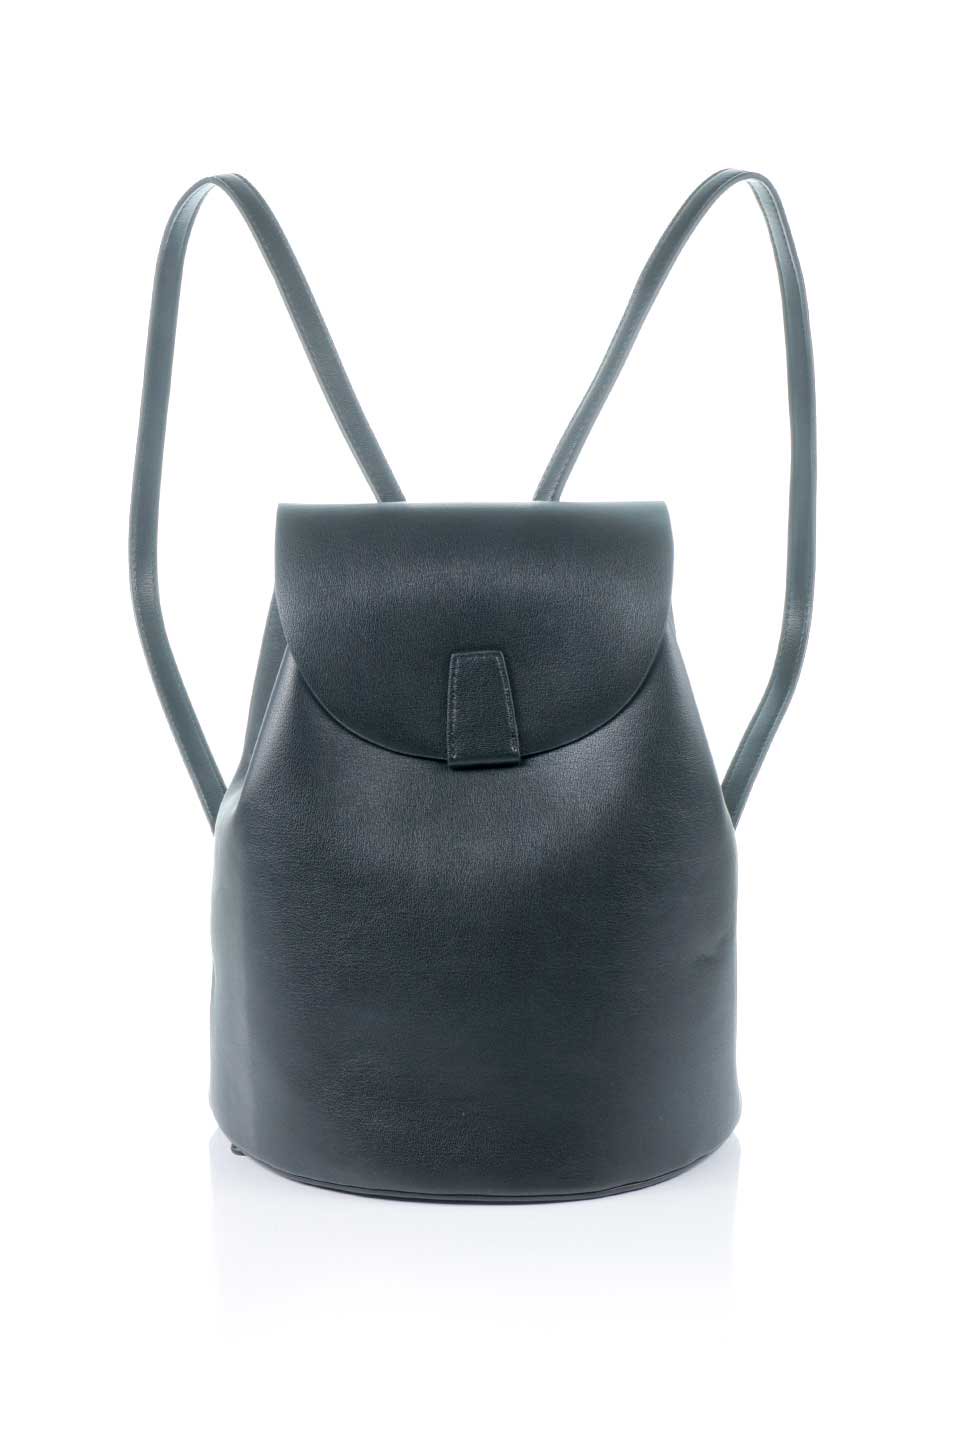 meliebiancoのAubrey(Black)ビーガンレザー・ミニリュック/海外ファッション好きにオススメのインポートバッグとかばん、MelieBianco（メリービアンコ）のバッグやその他。使いやすい程よい大きさのシンプルリュック。なめらかな高級ビーガンレザーを使用したシンプルデザインのアイテム。